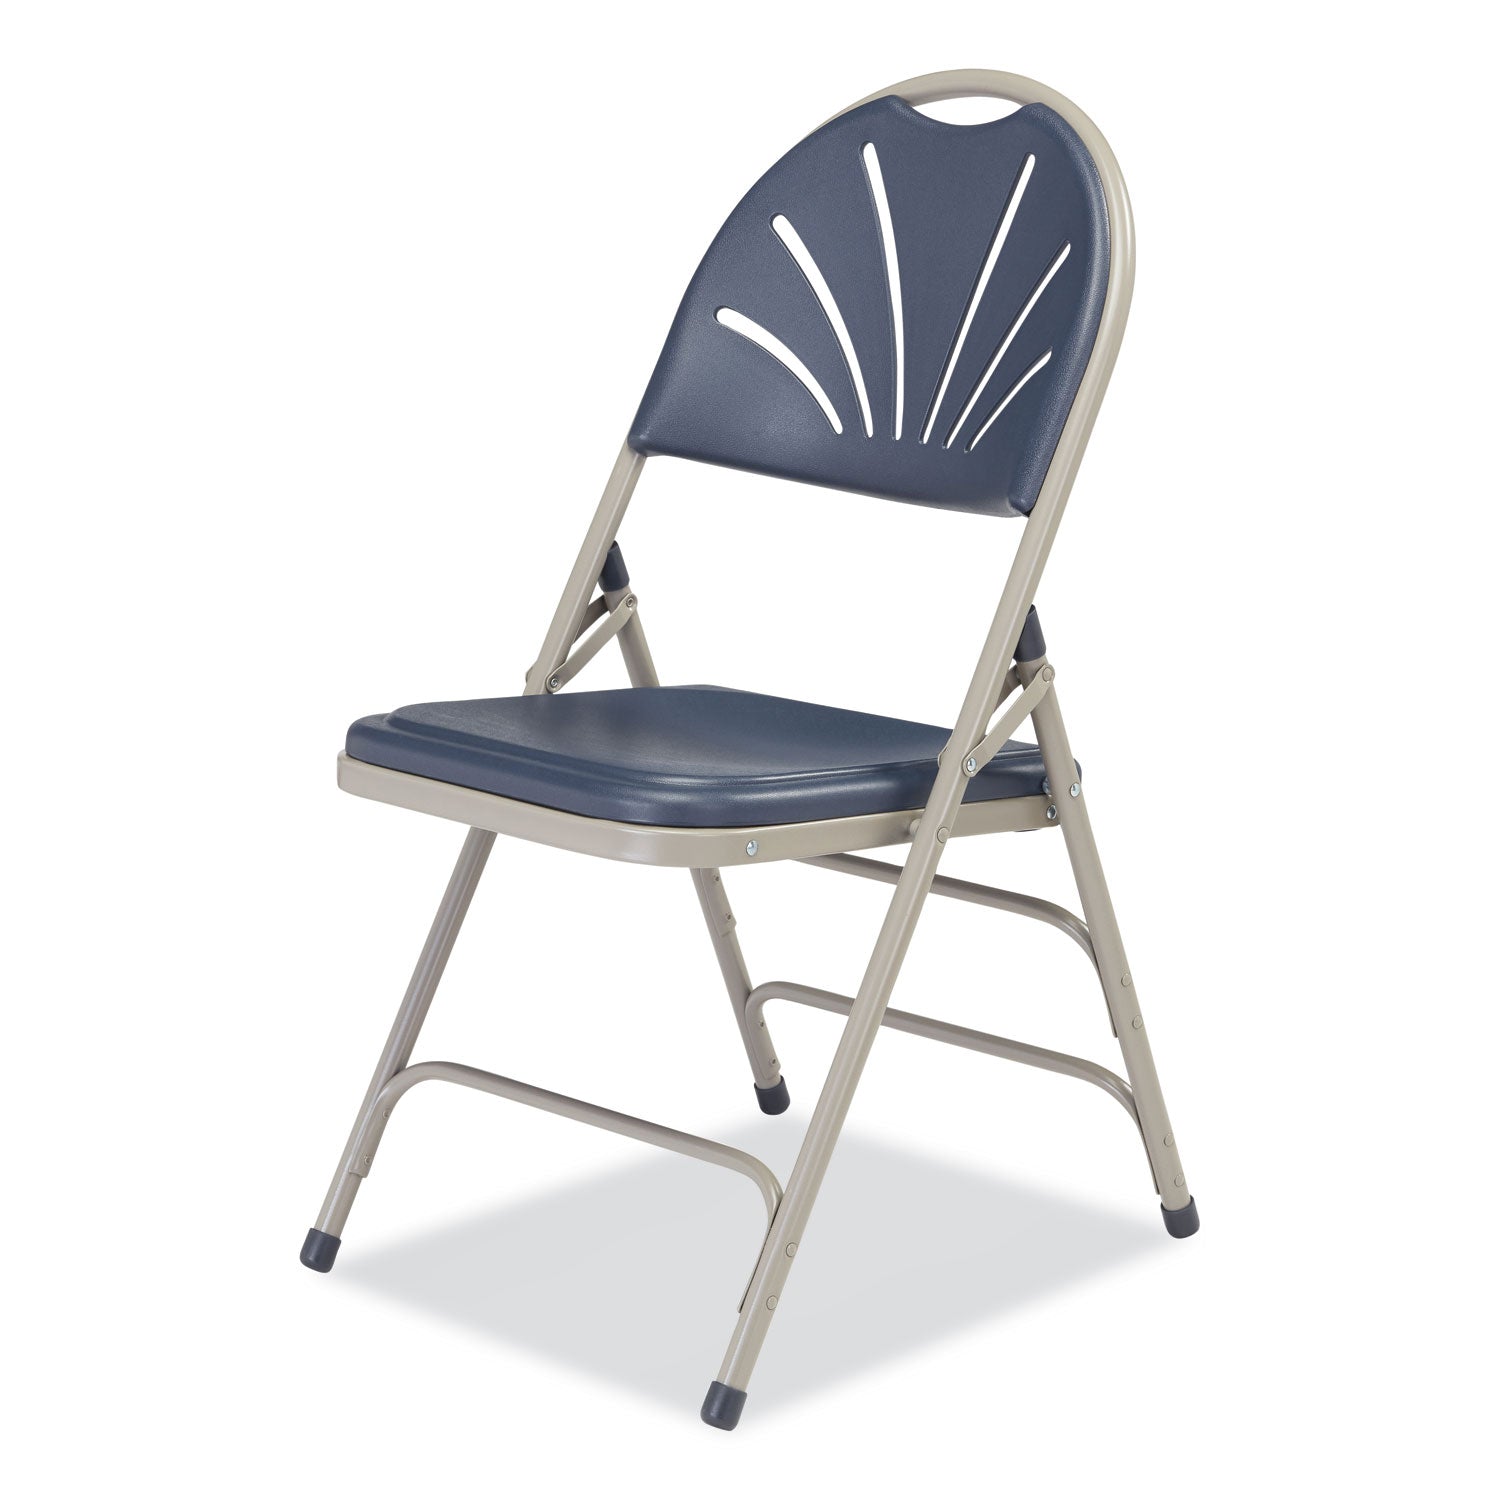 1100-series-deluxe-fan-back-tri-brace-folding-chair-supports-500-lb-dk-blue-seat-back-gray-base4-ctships-in-1-3-bus-days_nps1115 - 3